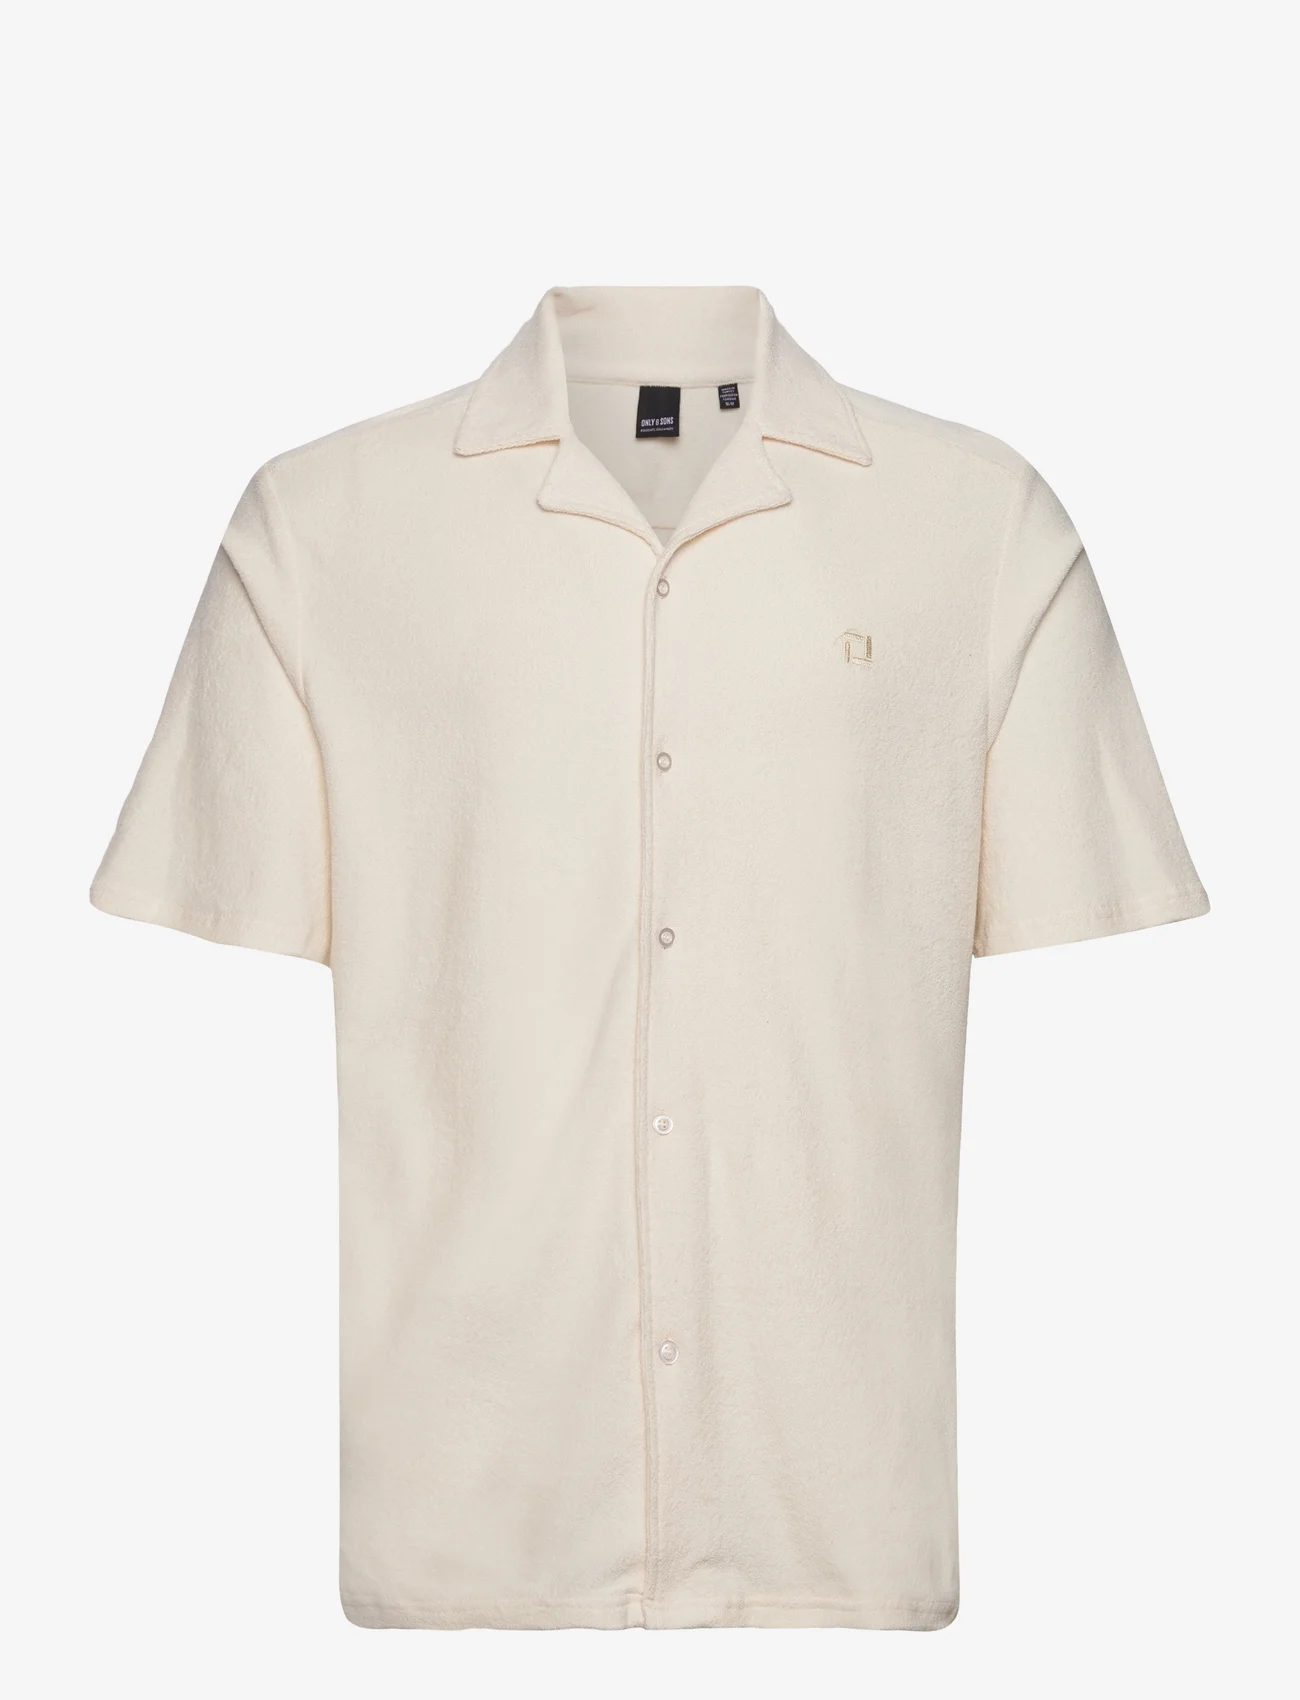 ONLY & SONS - ONSDAVIS REG TERRY SHIRT - laisvalaikio marškiniai - antique white - 0